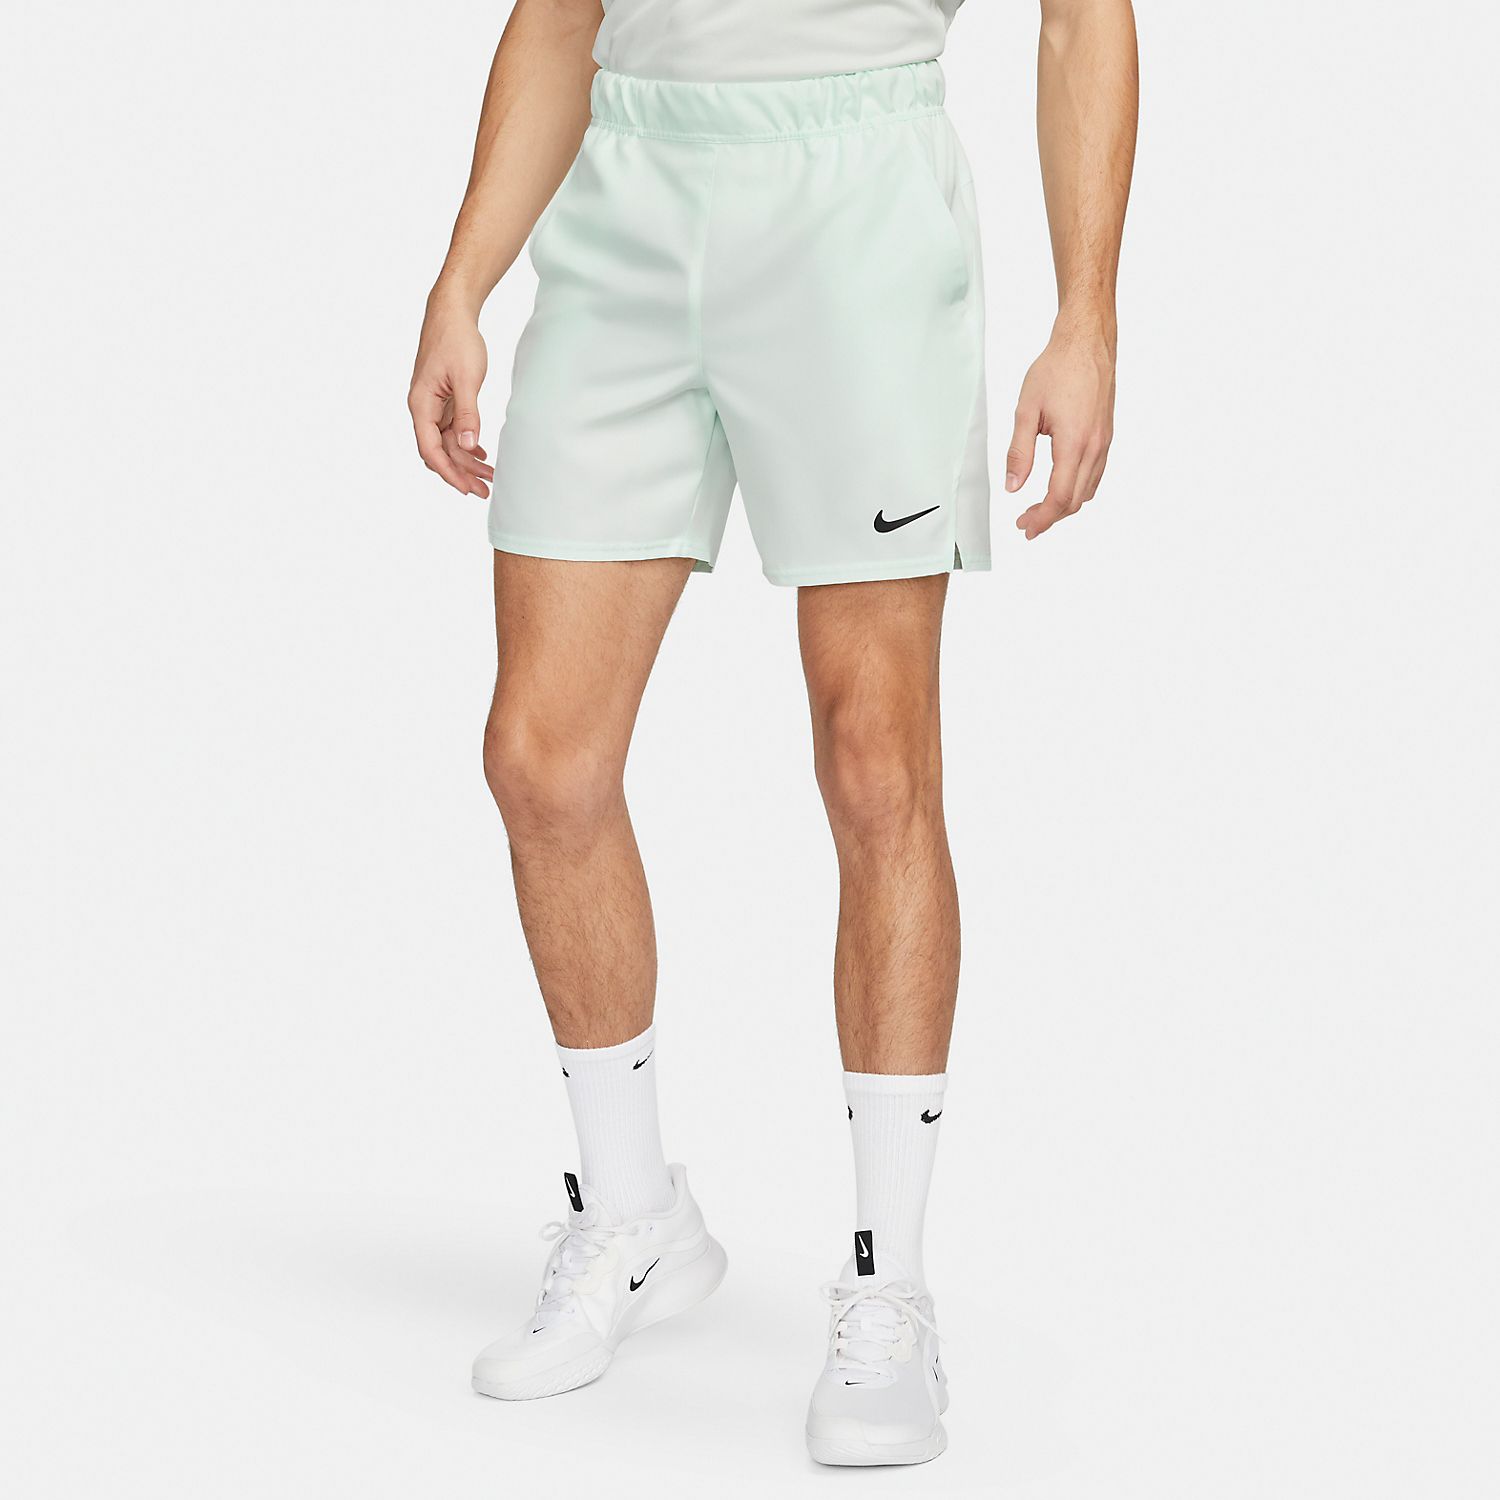 Nike Flex Victory 7in Men's Tennis Shorts - Barely Green/Black